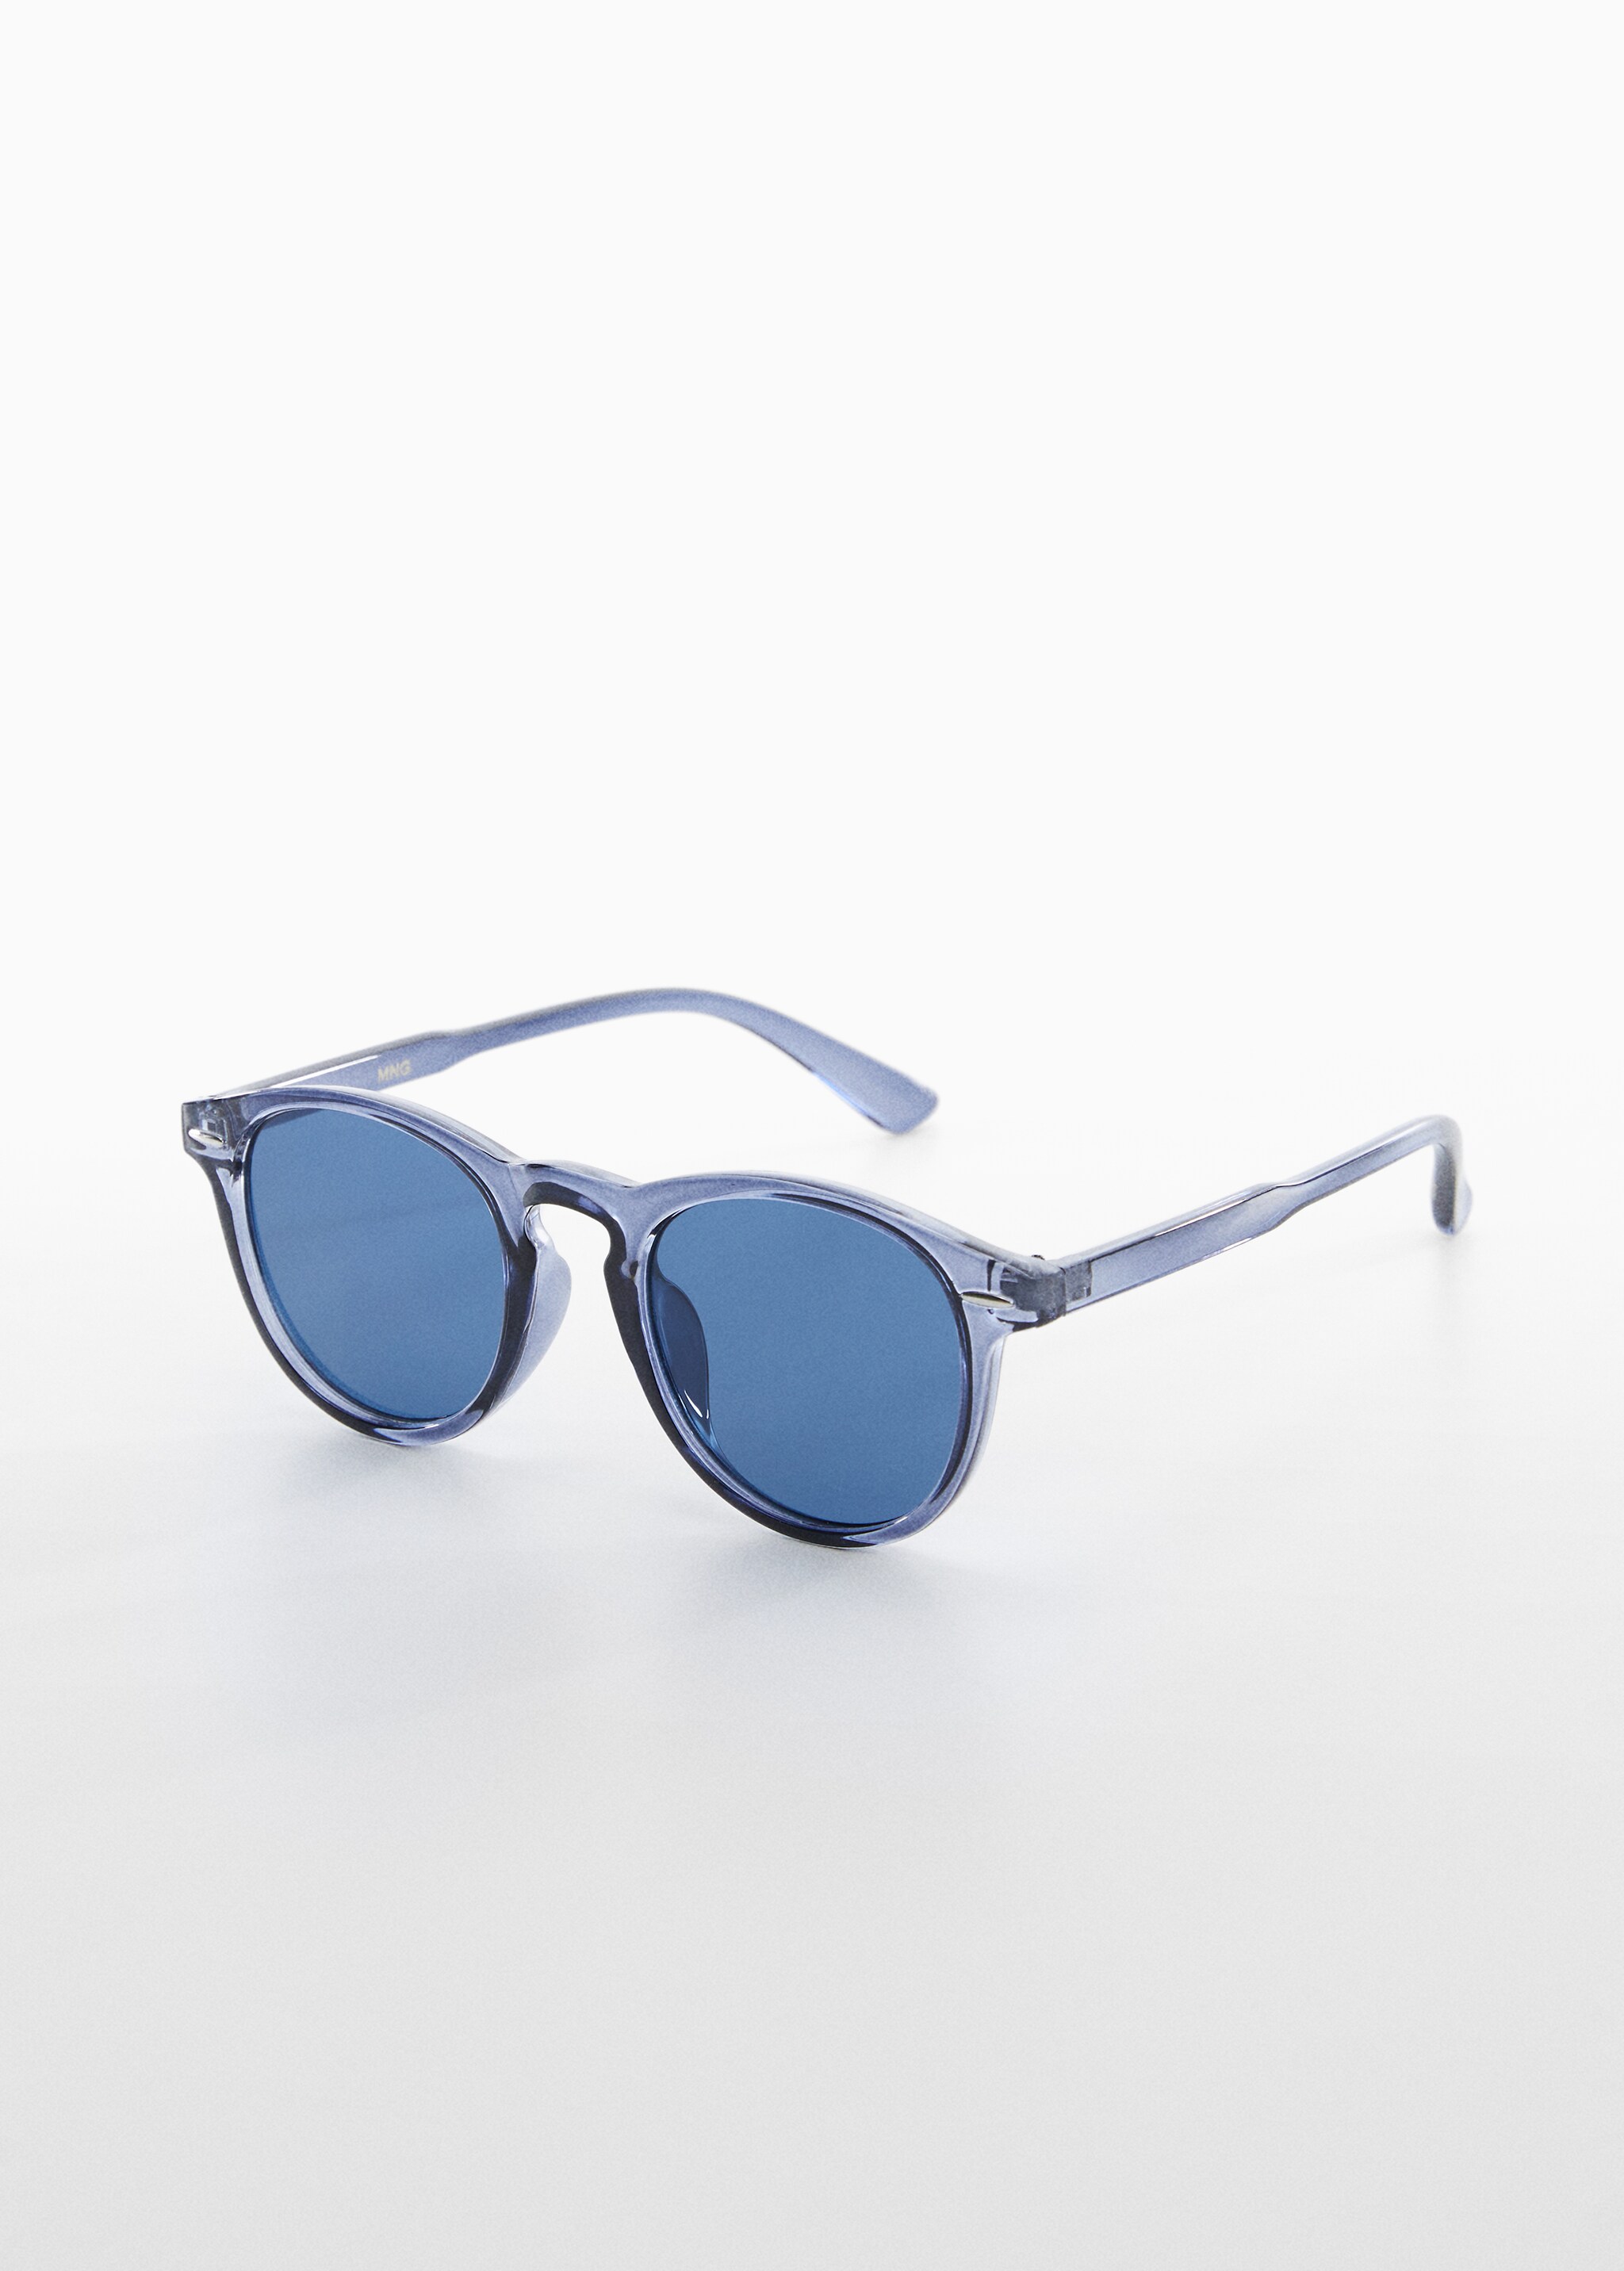 Clear frame sunglasses - Medium plane